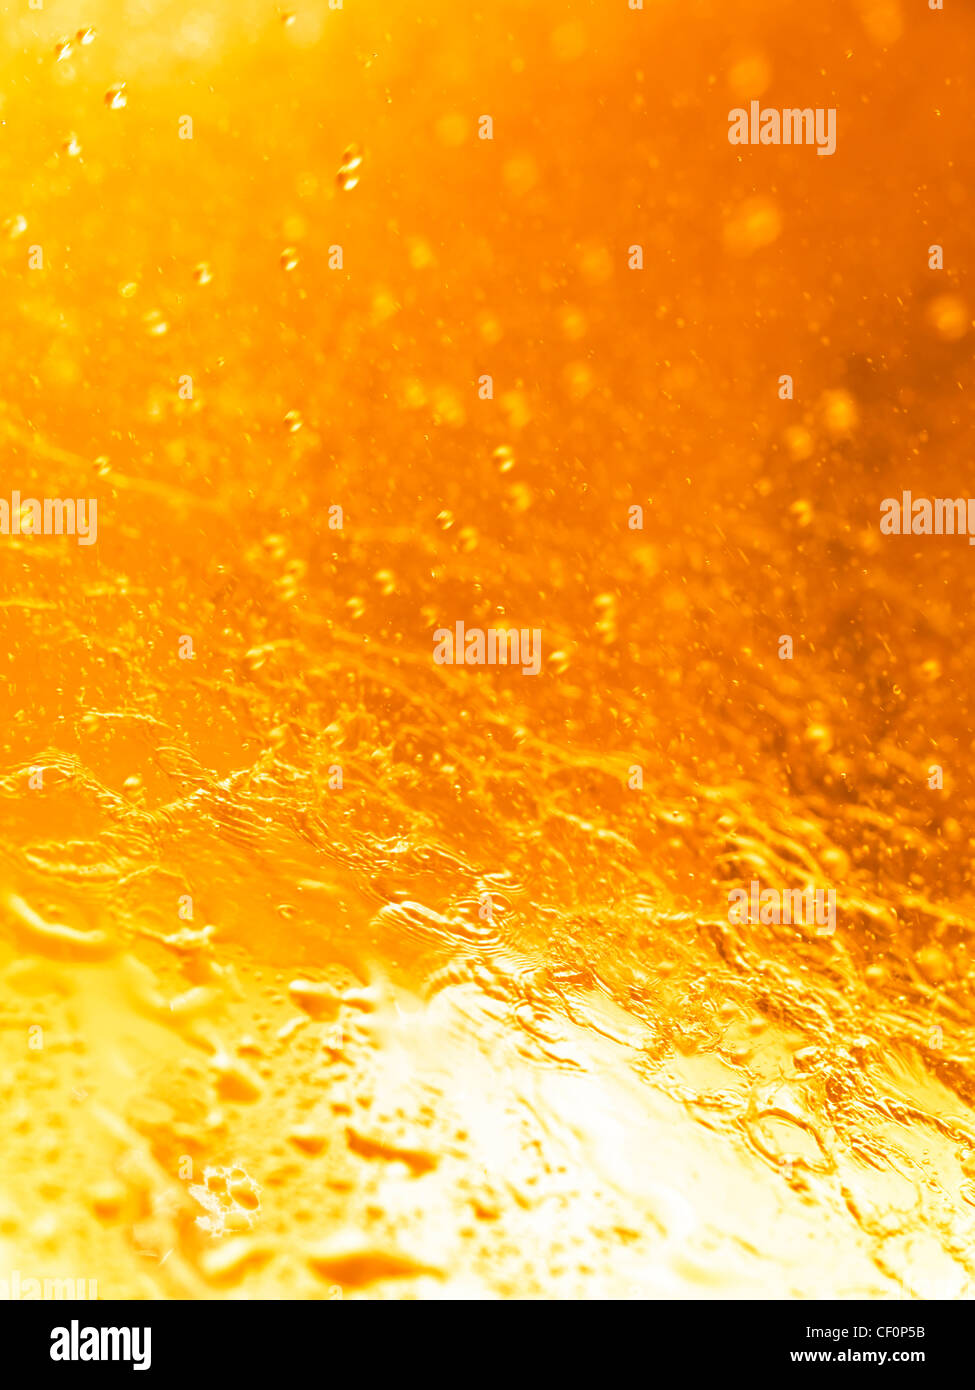 Closeup of splashing water abstract orange background texture Stock Photo